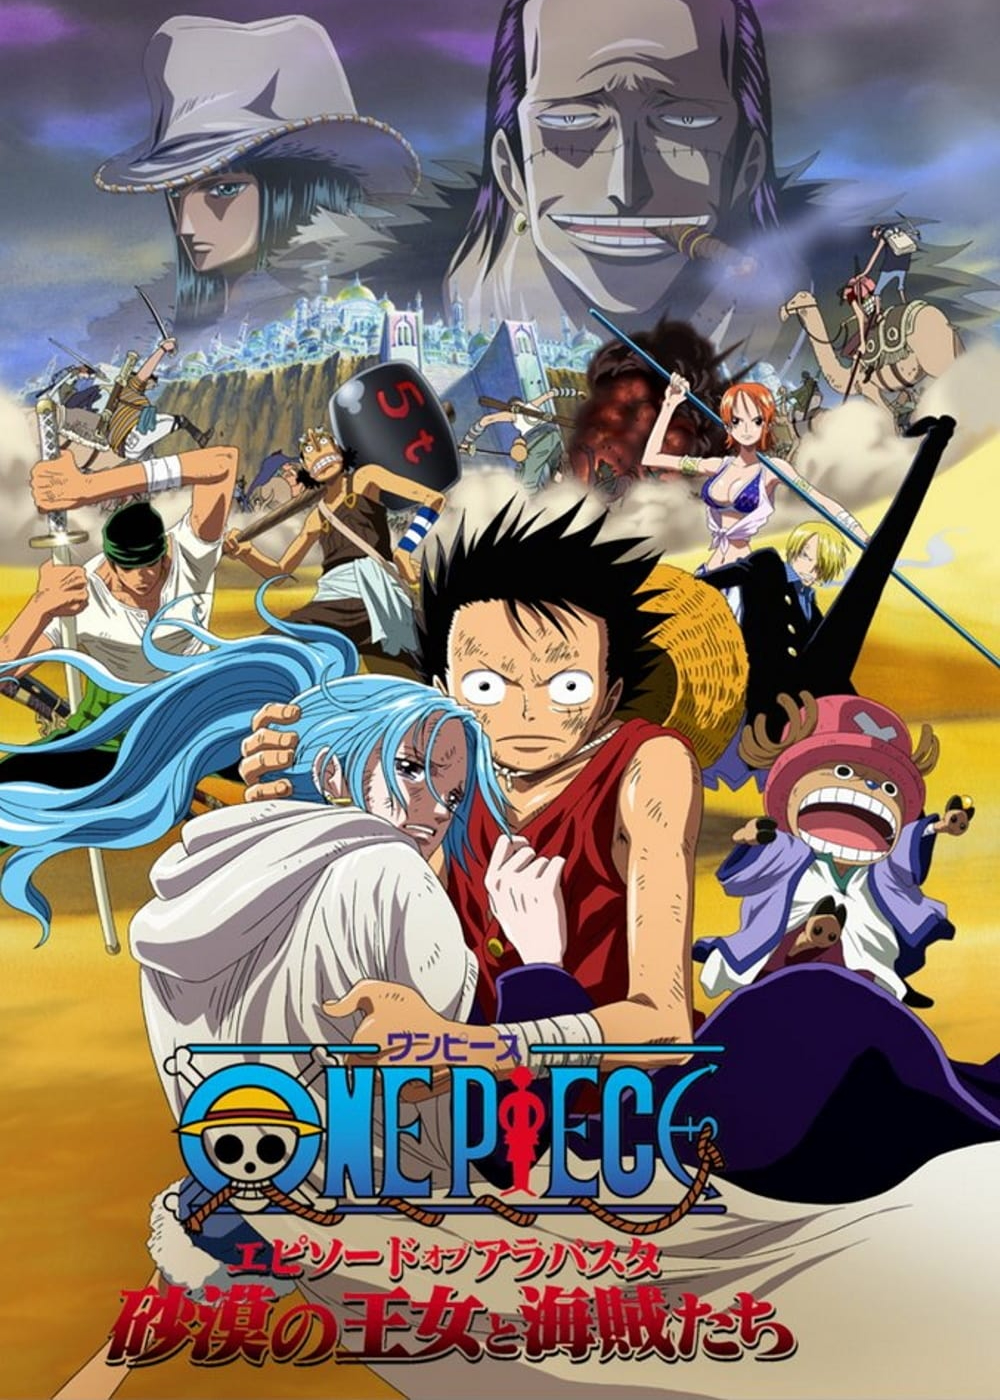 Poster Phim One Piece: Episode of Alabaster - Sabaku no Ojou to Kaizoku Tachi (One Piece: Episode of Alabaster - Sabaku no Ojou to Kaizoku Tachi)